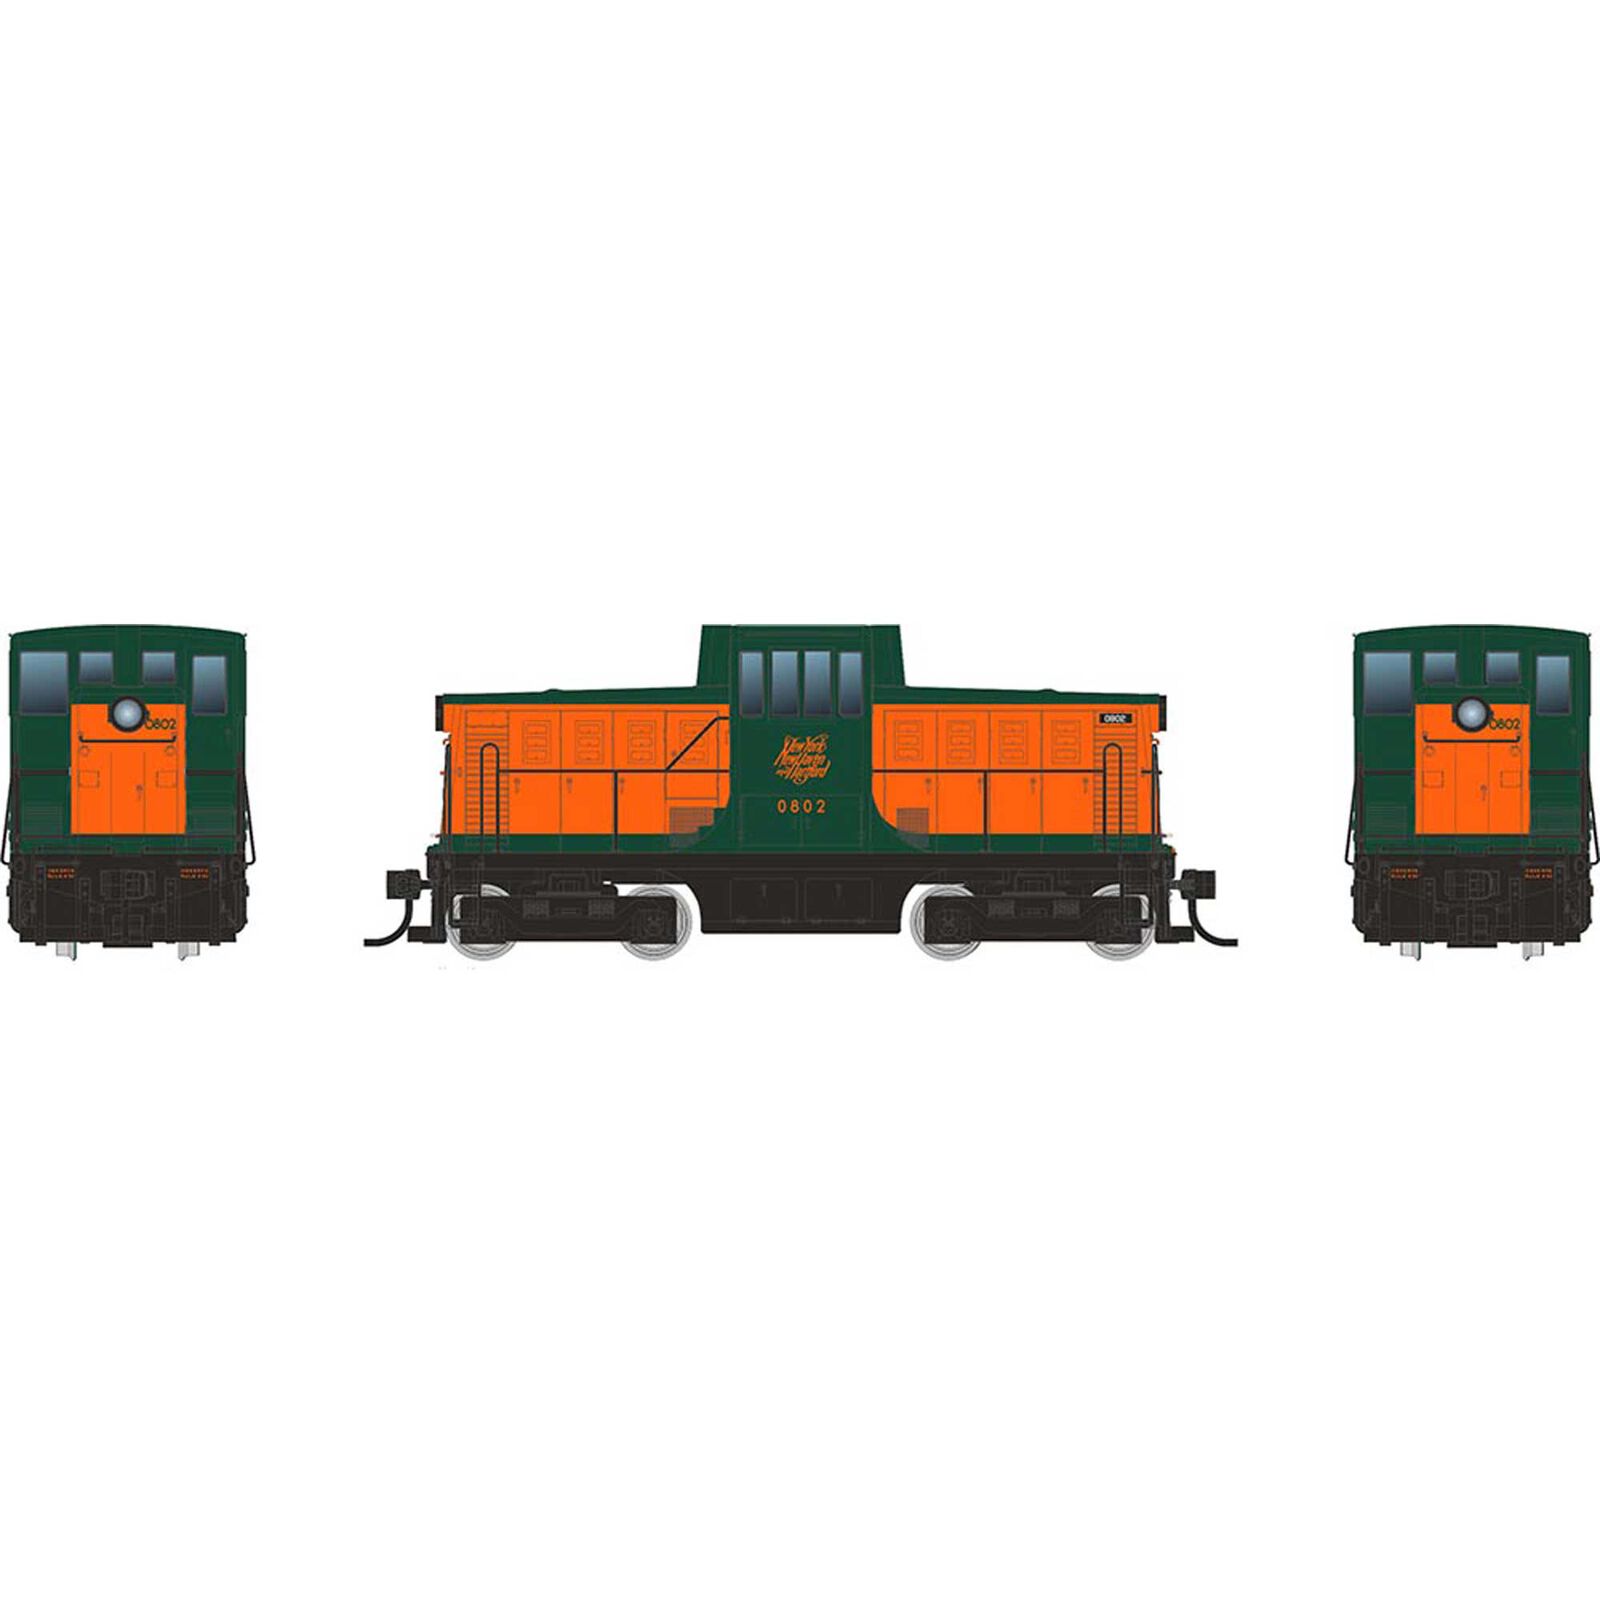 HO GE 44 Tonner Switcher Locomotive, NH Warm Orange #0802